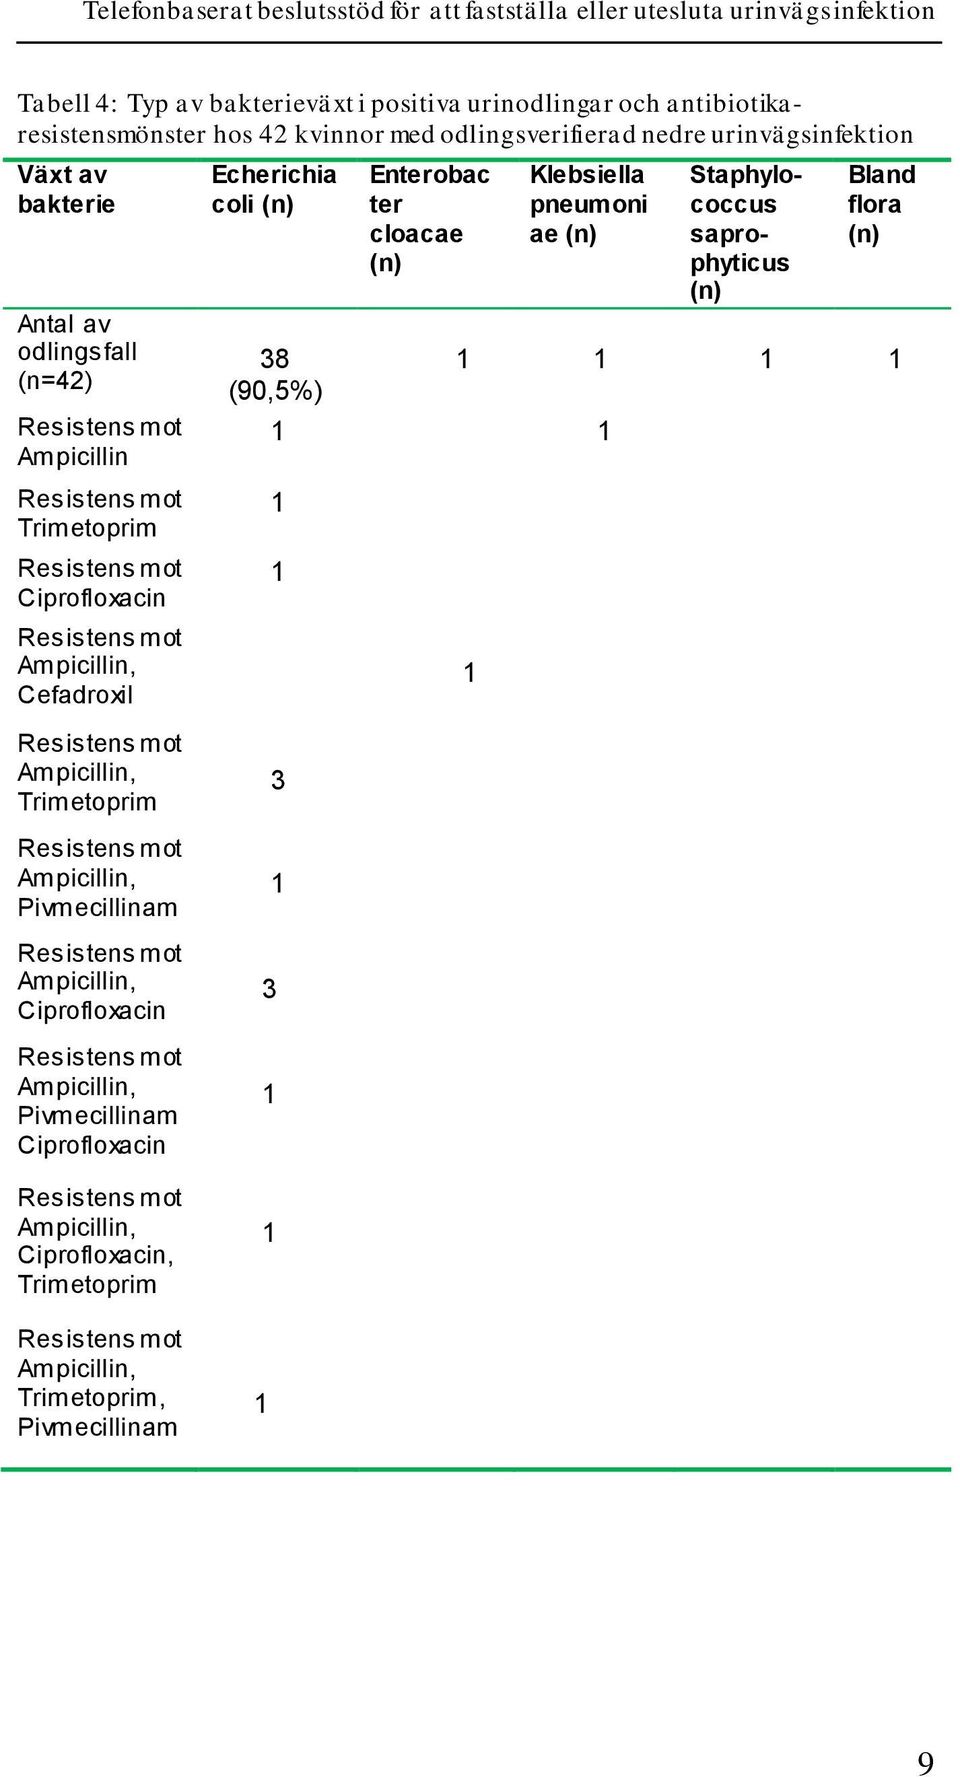 Klebsiella pneumoni ae (n) 1 1 1 1 Staphylococcus saprophyticus (n) Bland flora (n) 1 1 1 1 1 Resistens mot Ampicillin, Trimetoprim Resistens mot Ampicillin, Pivmecillinam Resistens mot